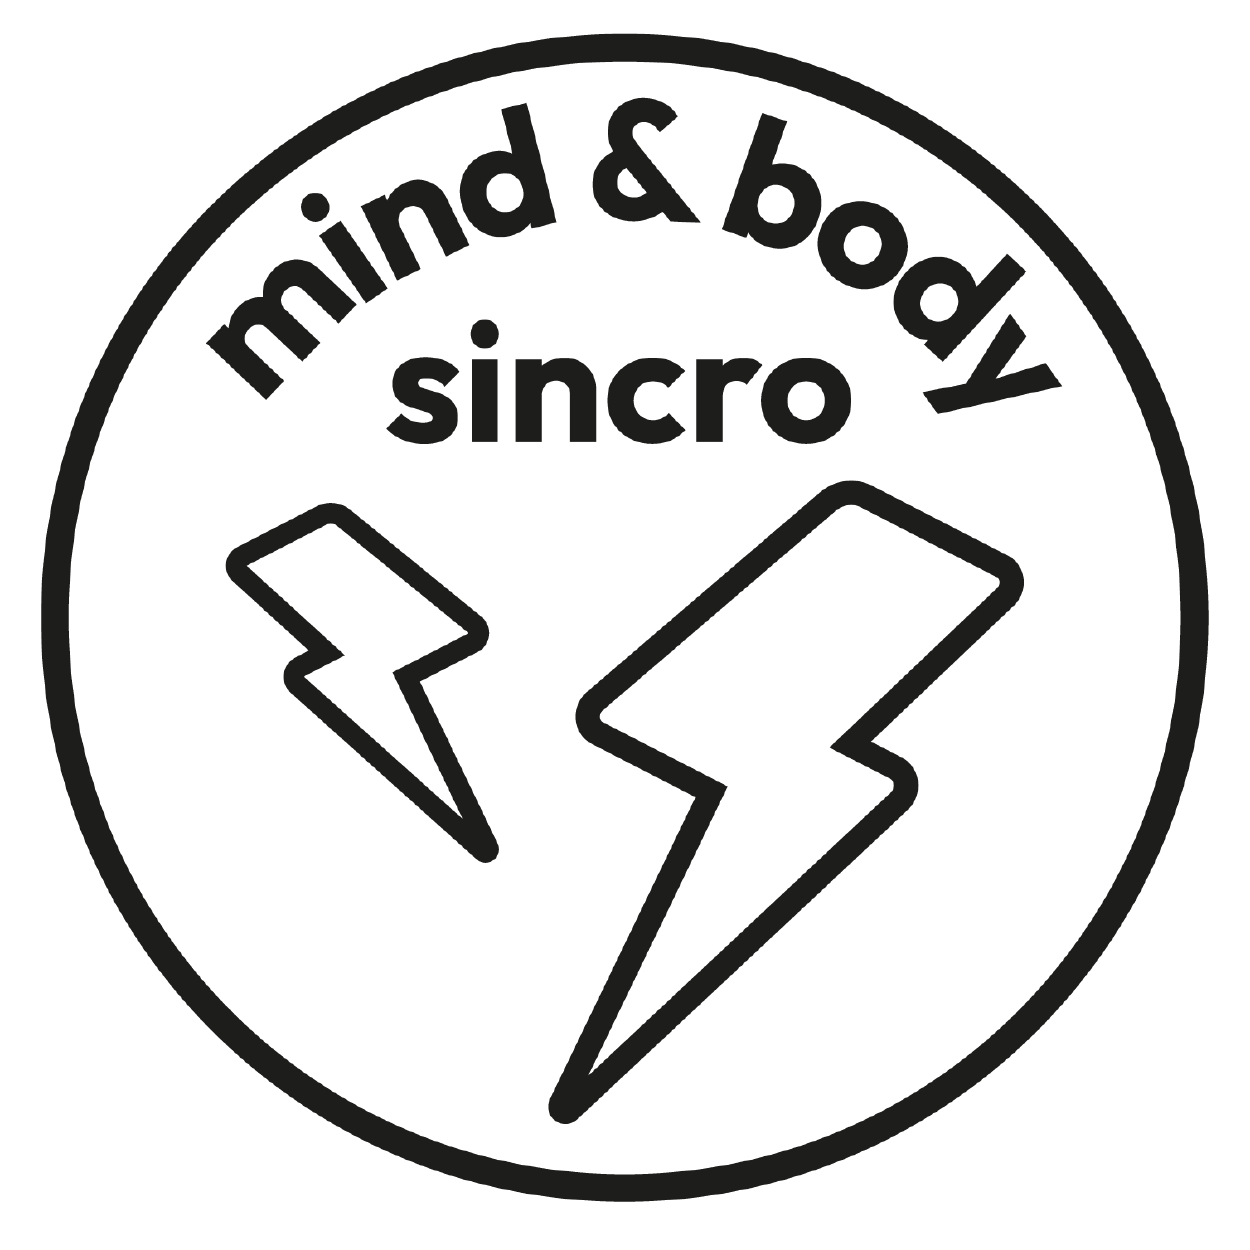 Icono mind & body sincro